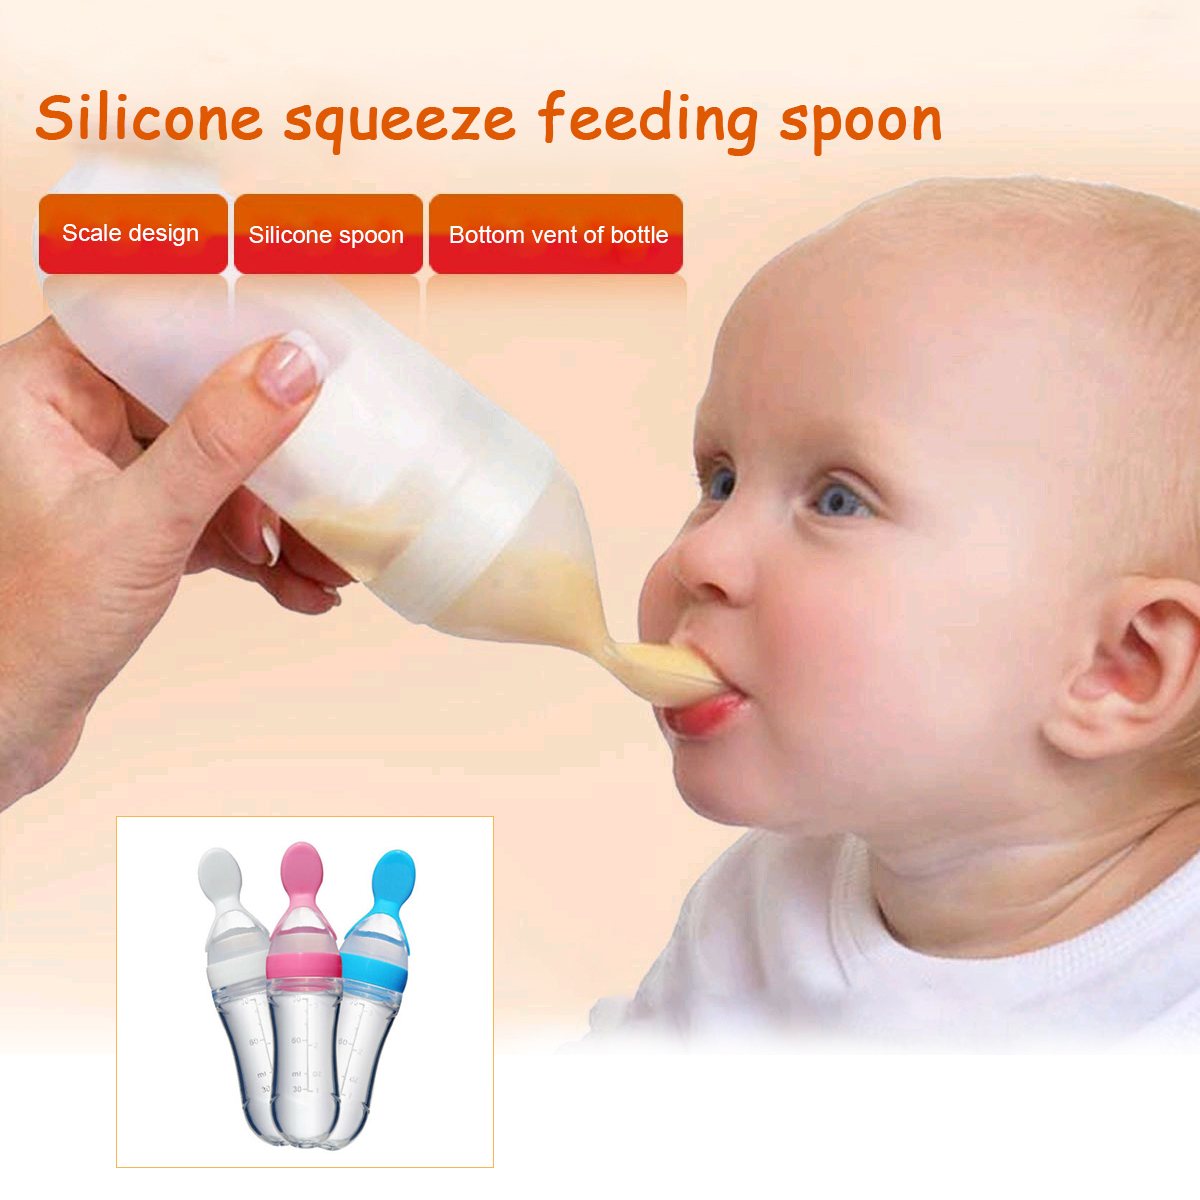 baby food feeder spoon